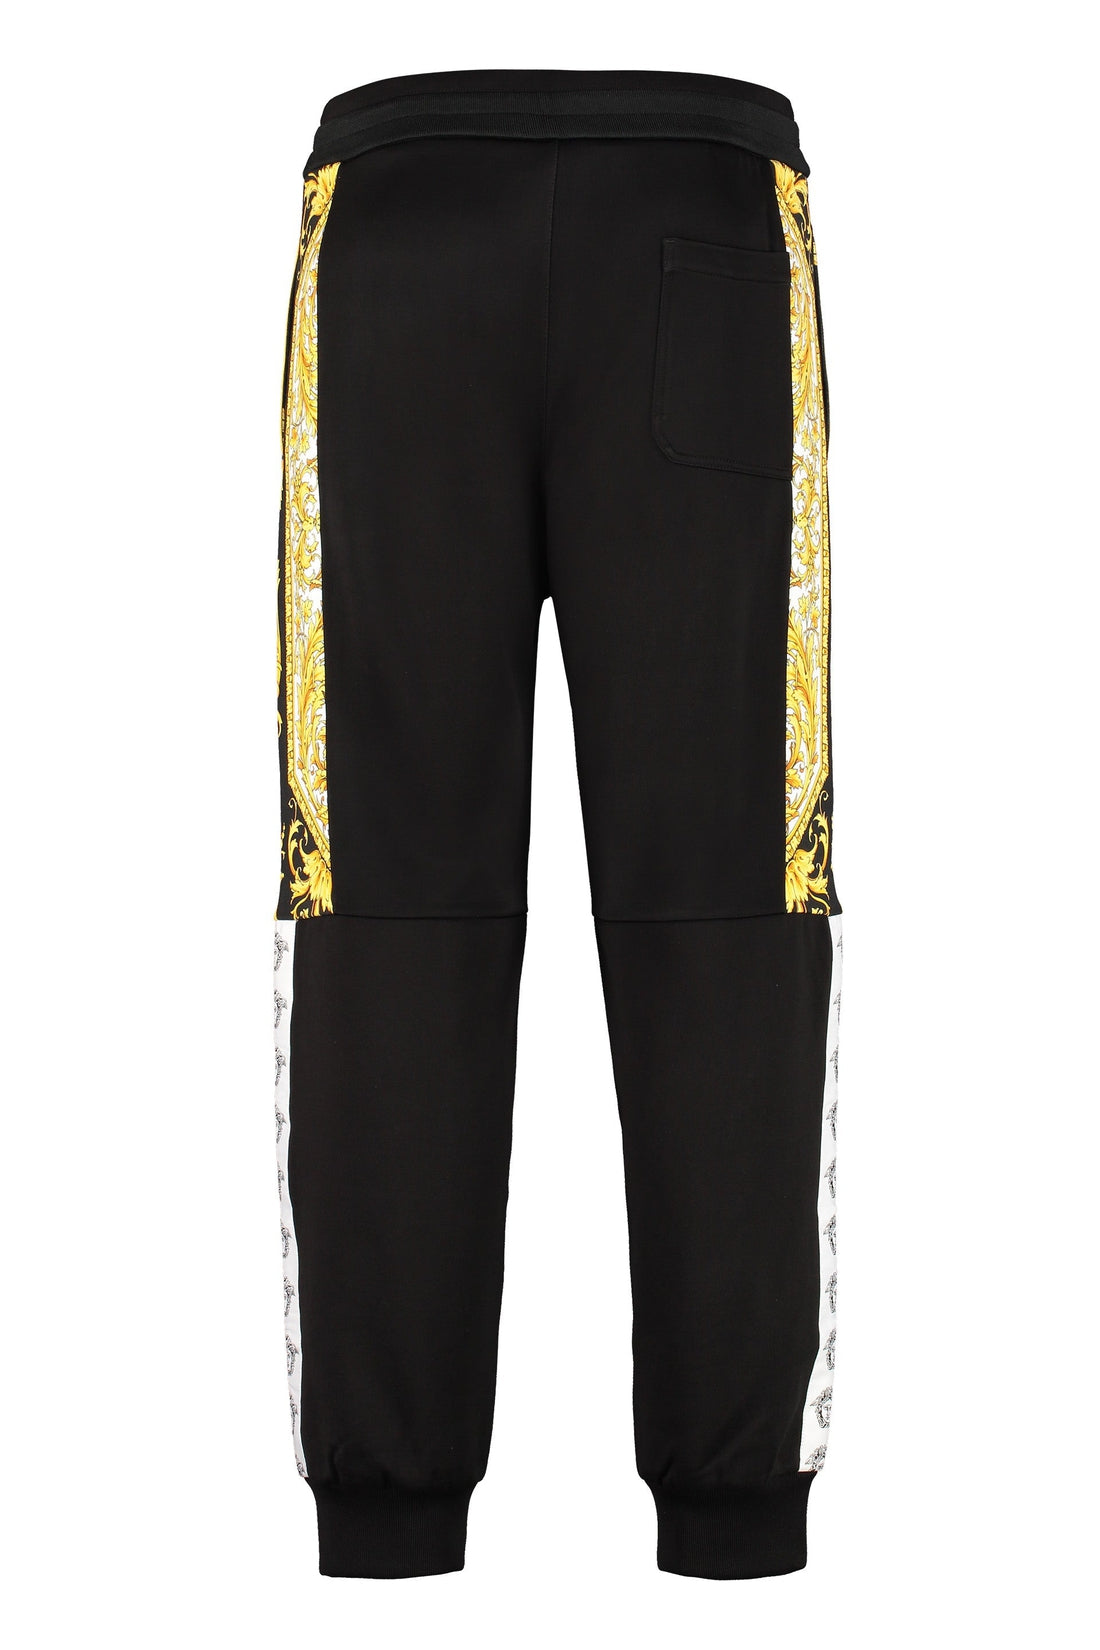 Versace-OUTLET-SALE-Contrasting side stripes track-pants-ARCHIVIST